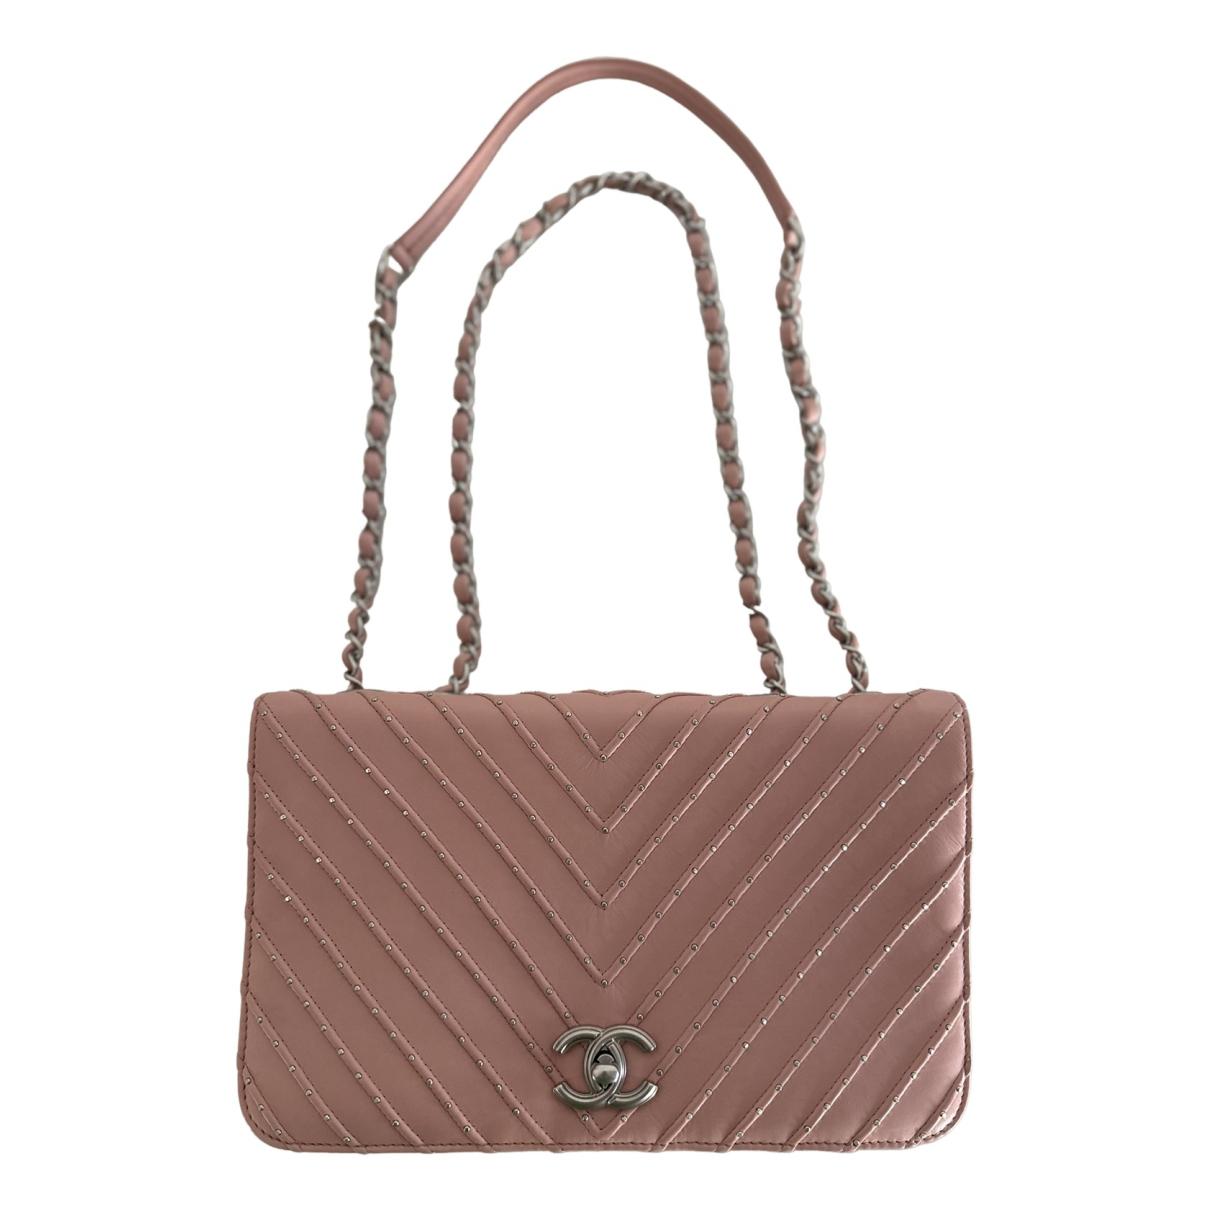 Trendy CC Flap leather handbag - 1